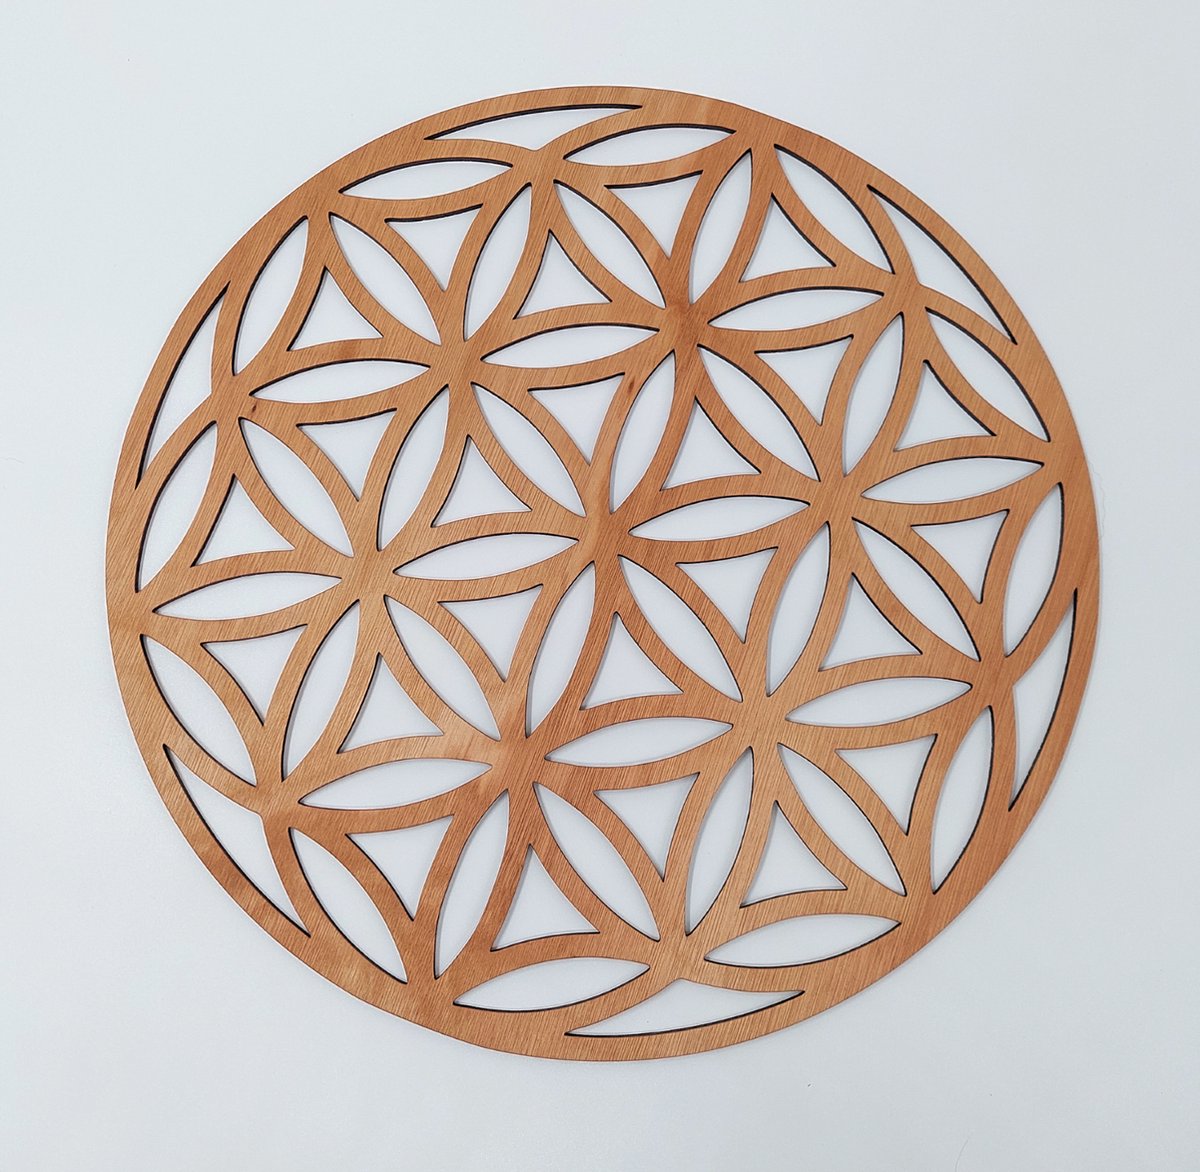 Houten placemats - Flower of life - Ronde placemat - Geometrische wanddecoratie